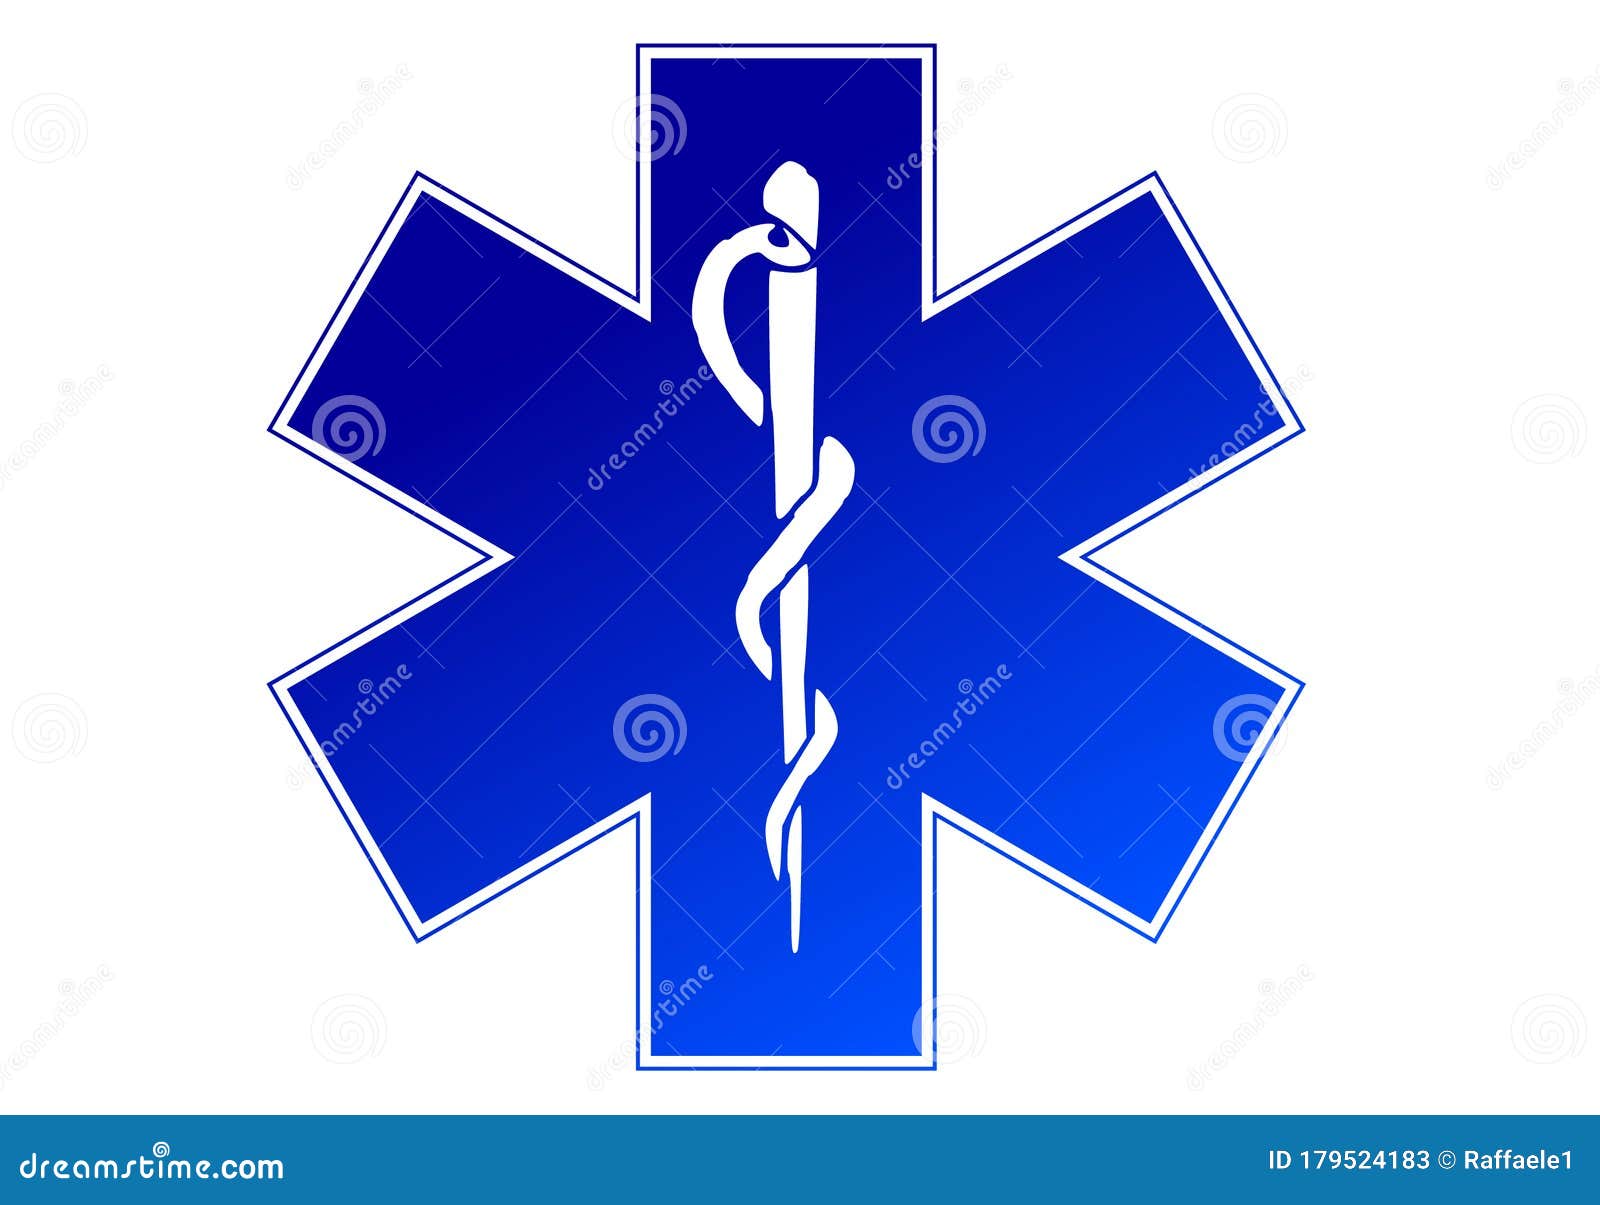 ems emergency medical service logo